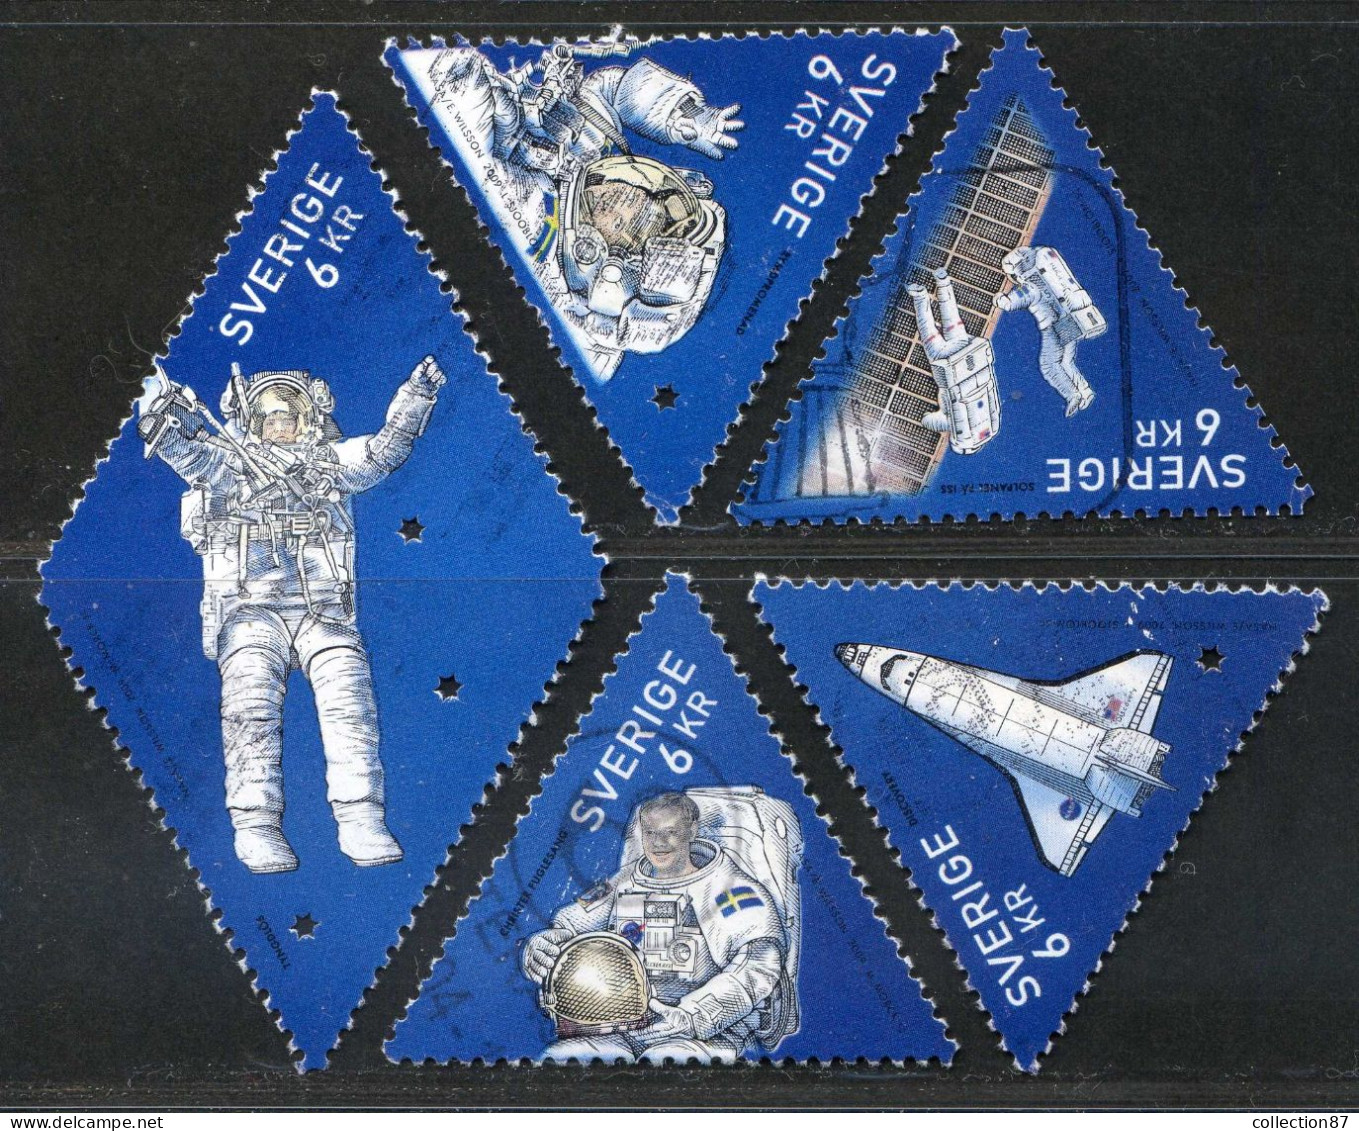 Réf 77 < SUEDE < Yvert N° 2696 à 2700 Ø < Année 2009 Used SWEDEN < Espace Christer Fuglesang Premier Astronaute Suédois - Used Stamps